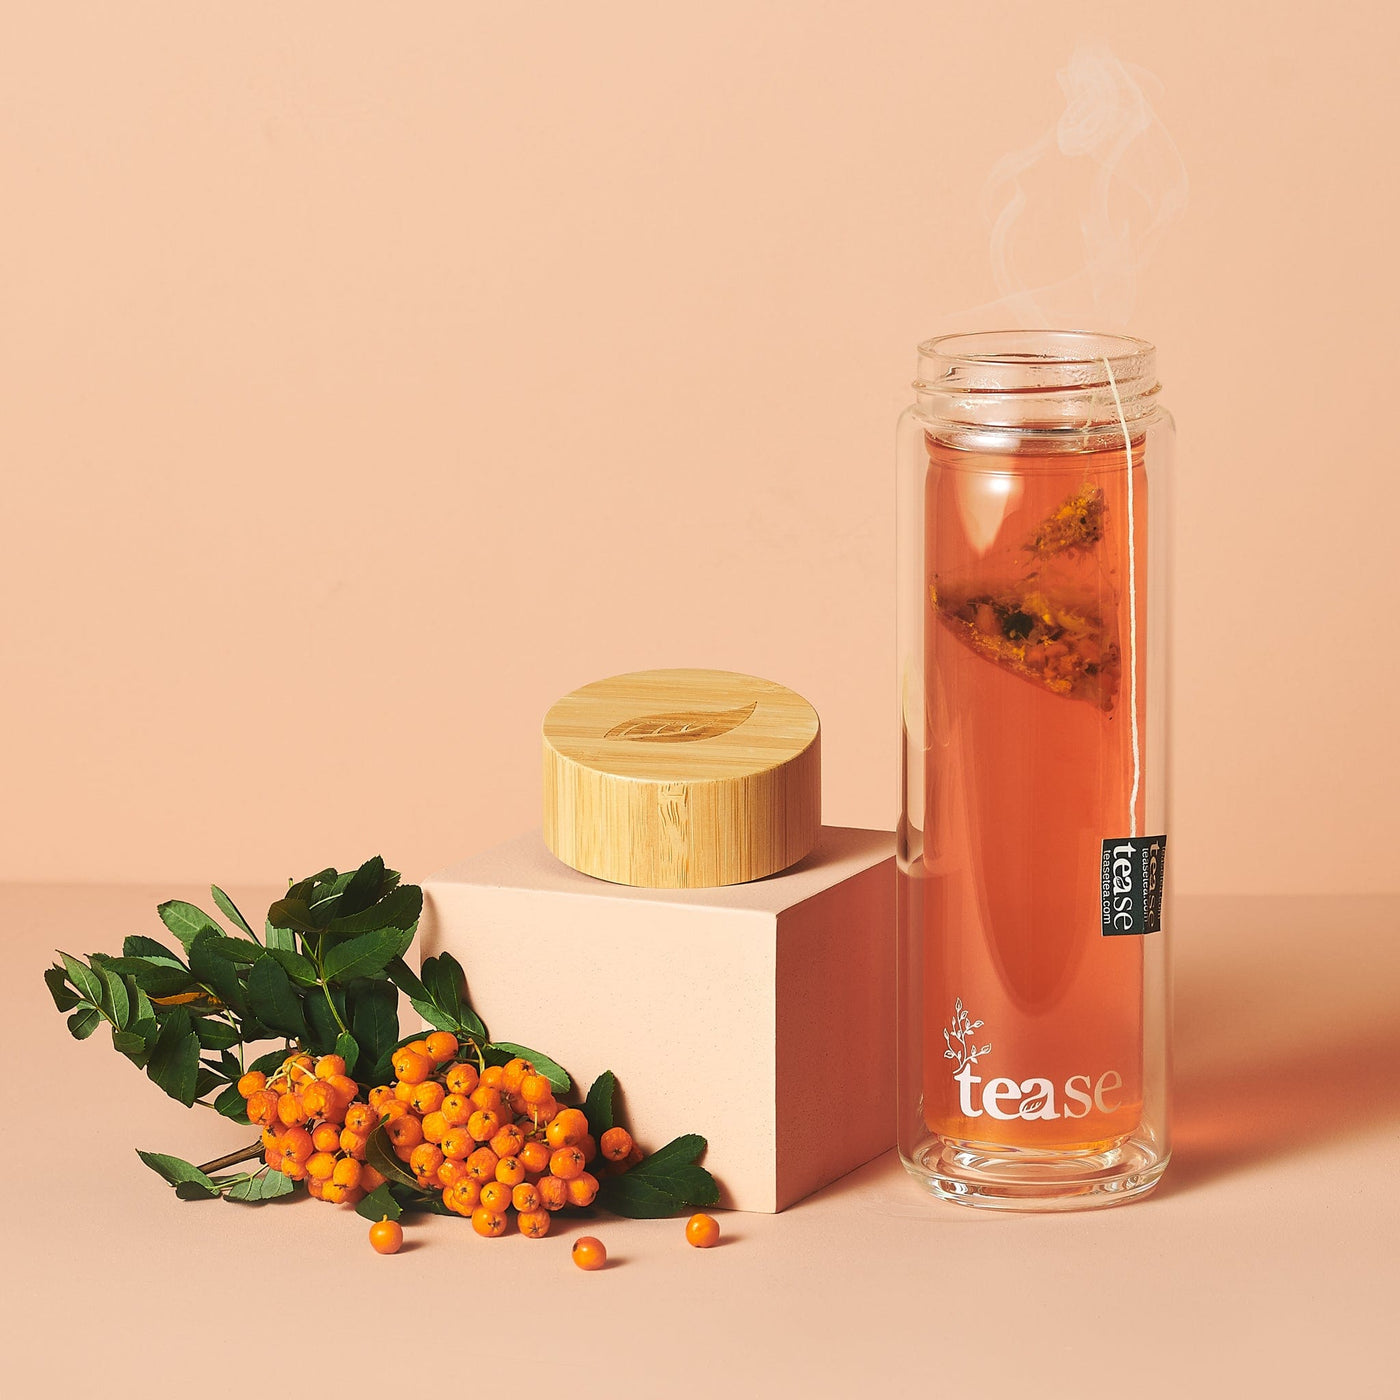 Tea Infuser Tumbler - Bamboo